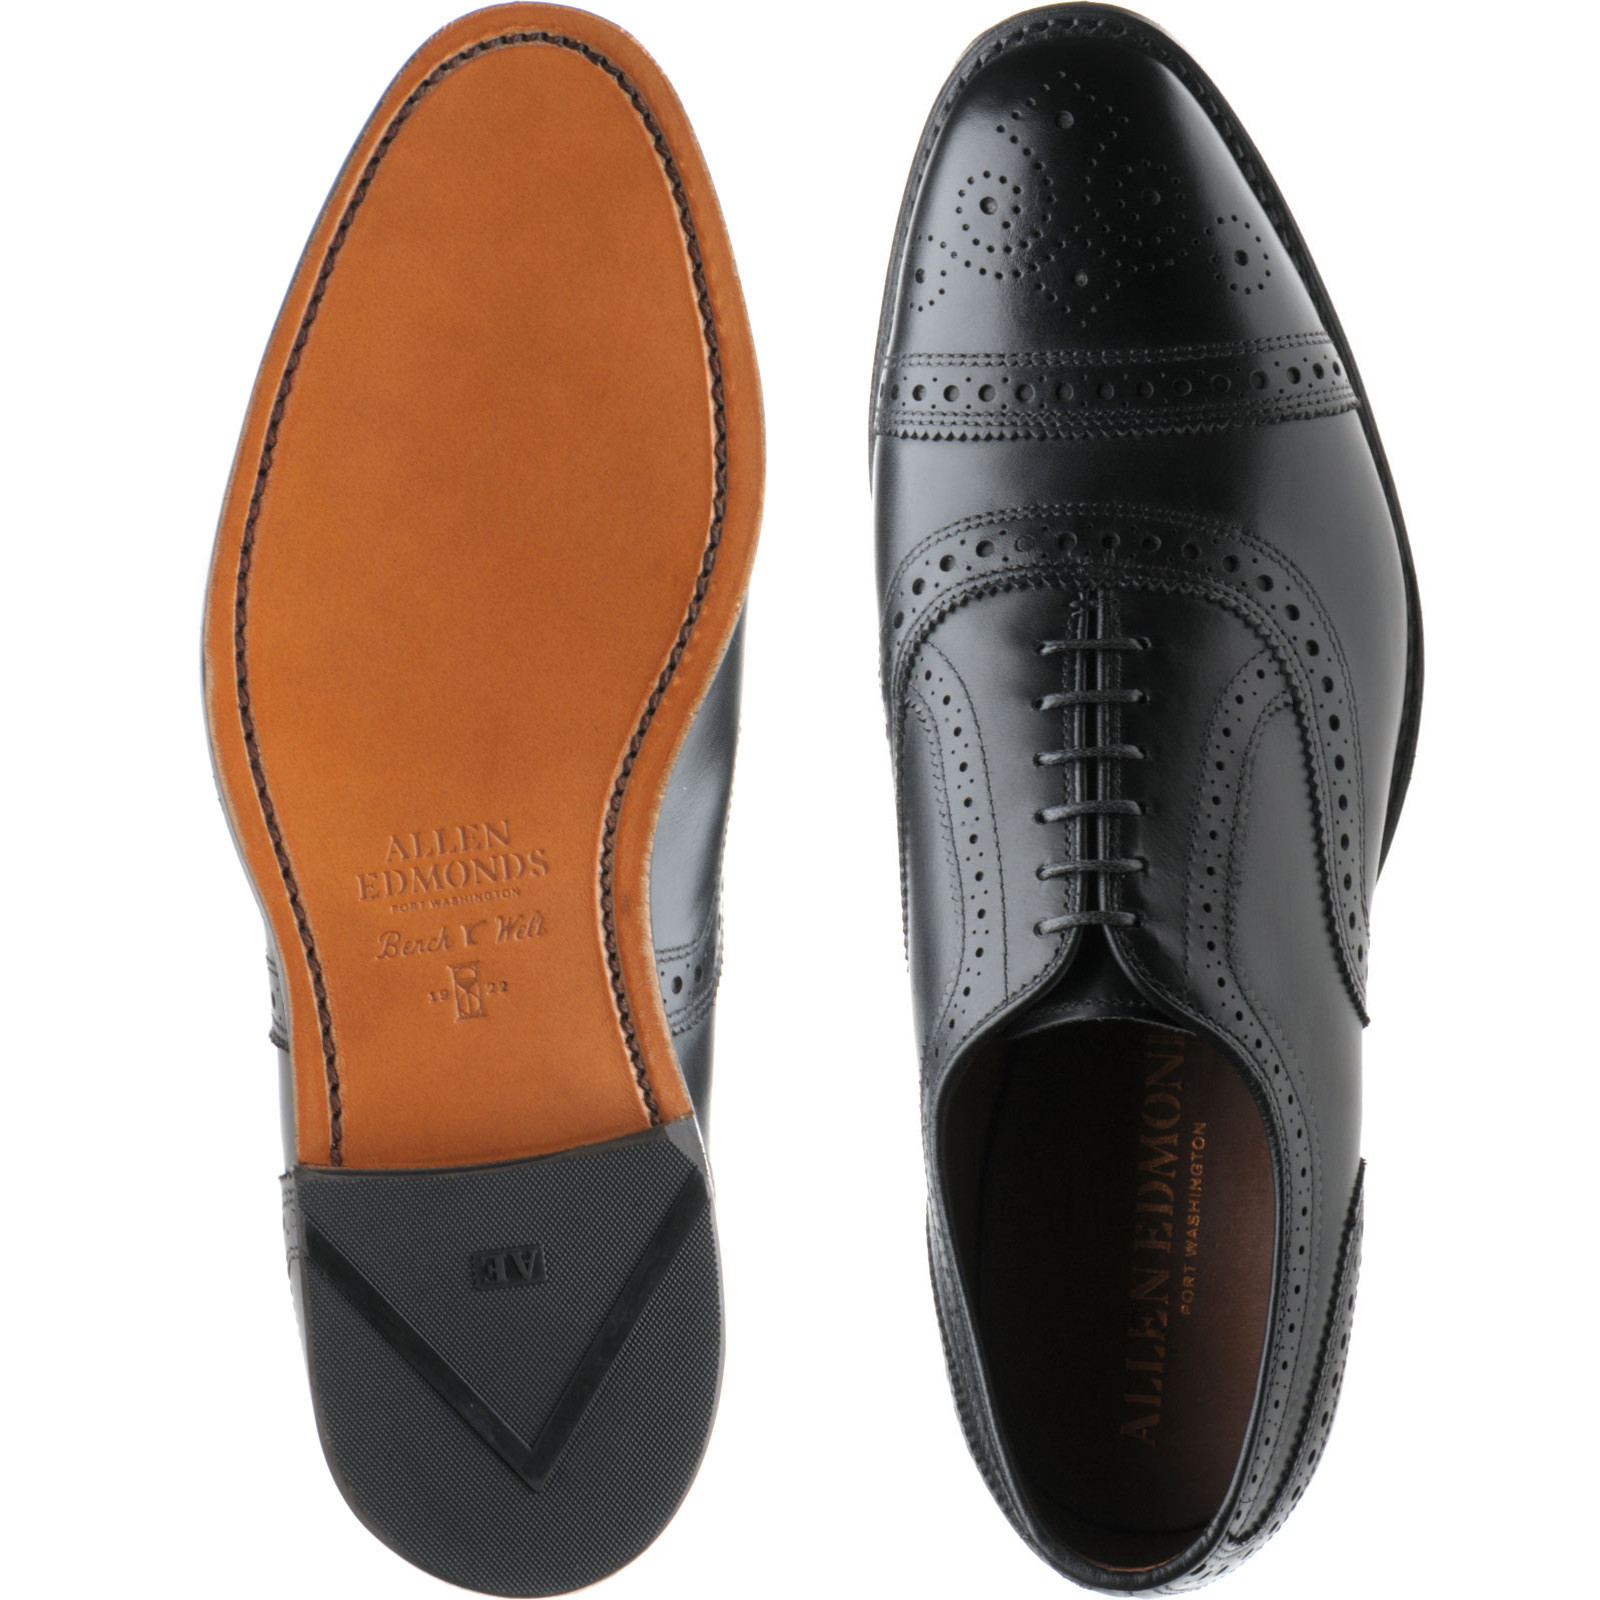 Allen Edmonds shoes | Allen Edmonds Sale | Strand brogues in Black Calf ...